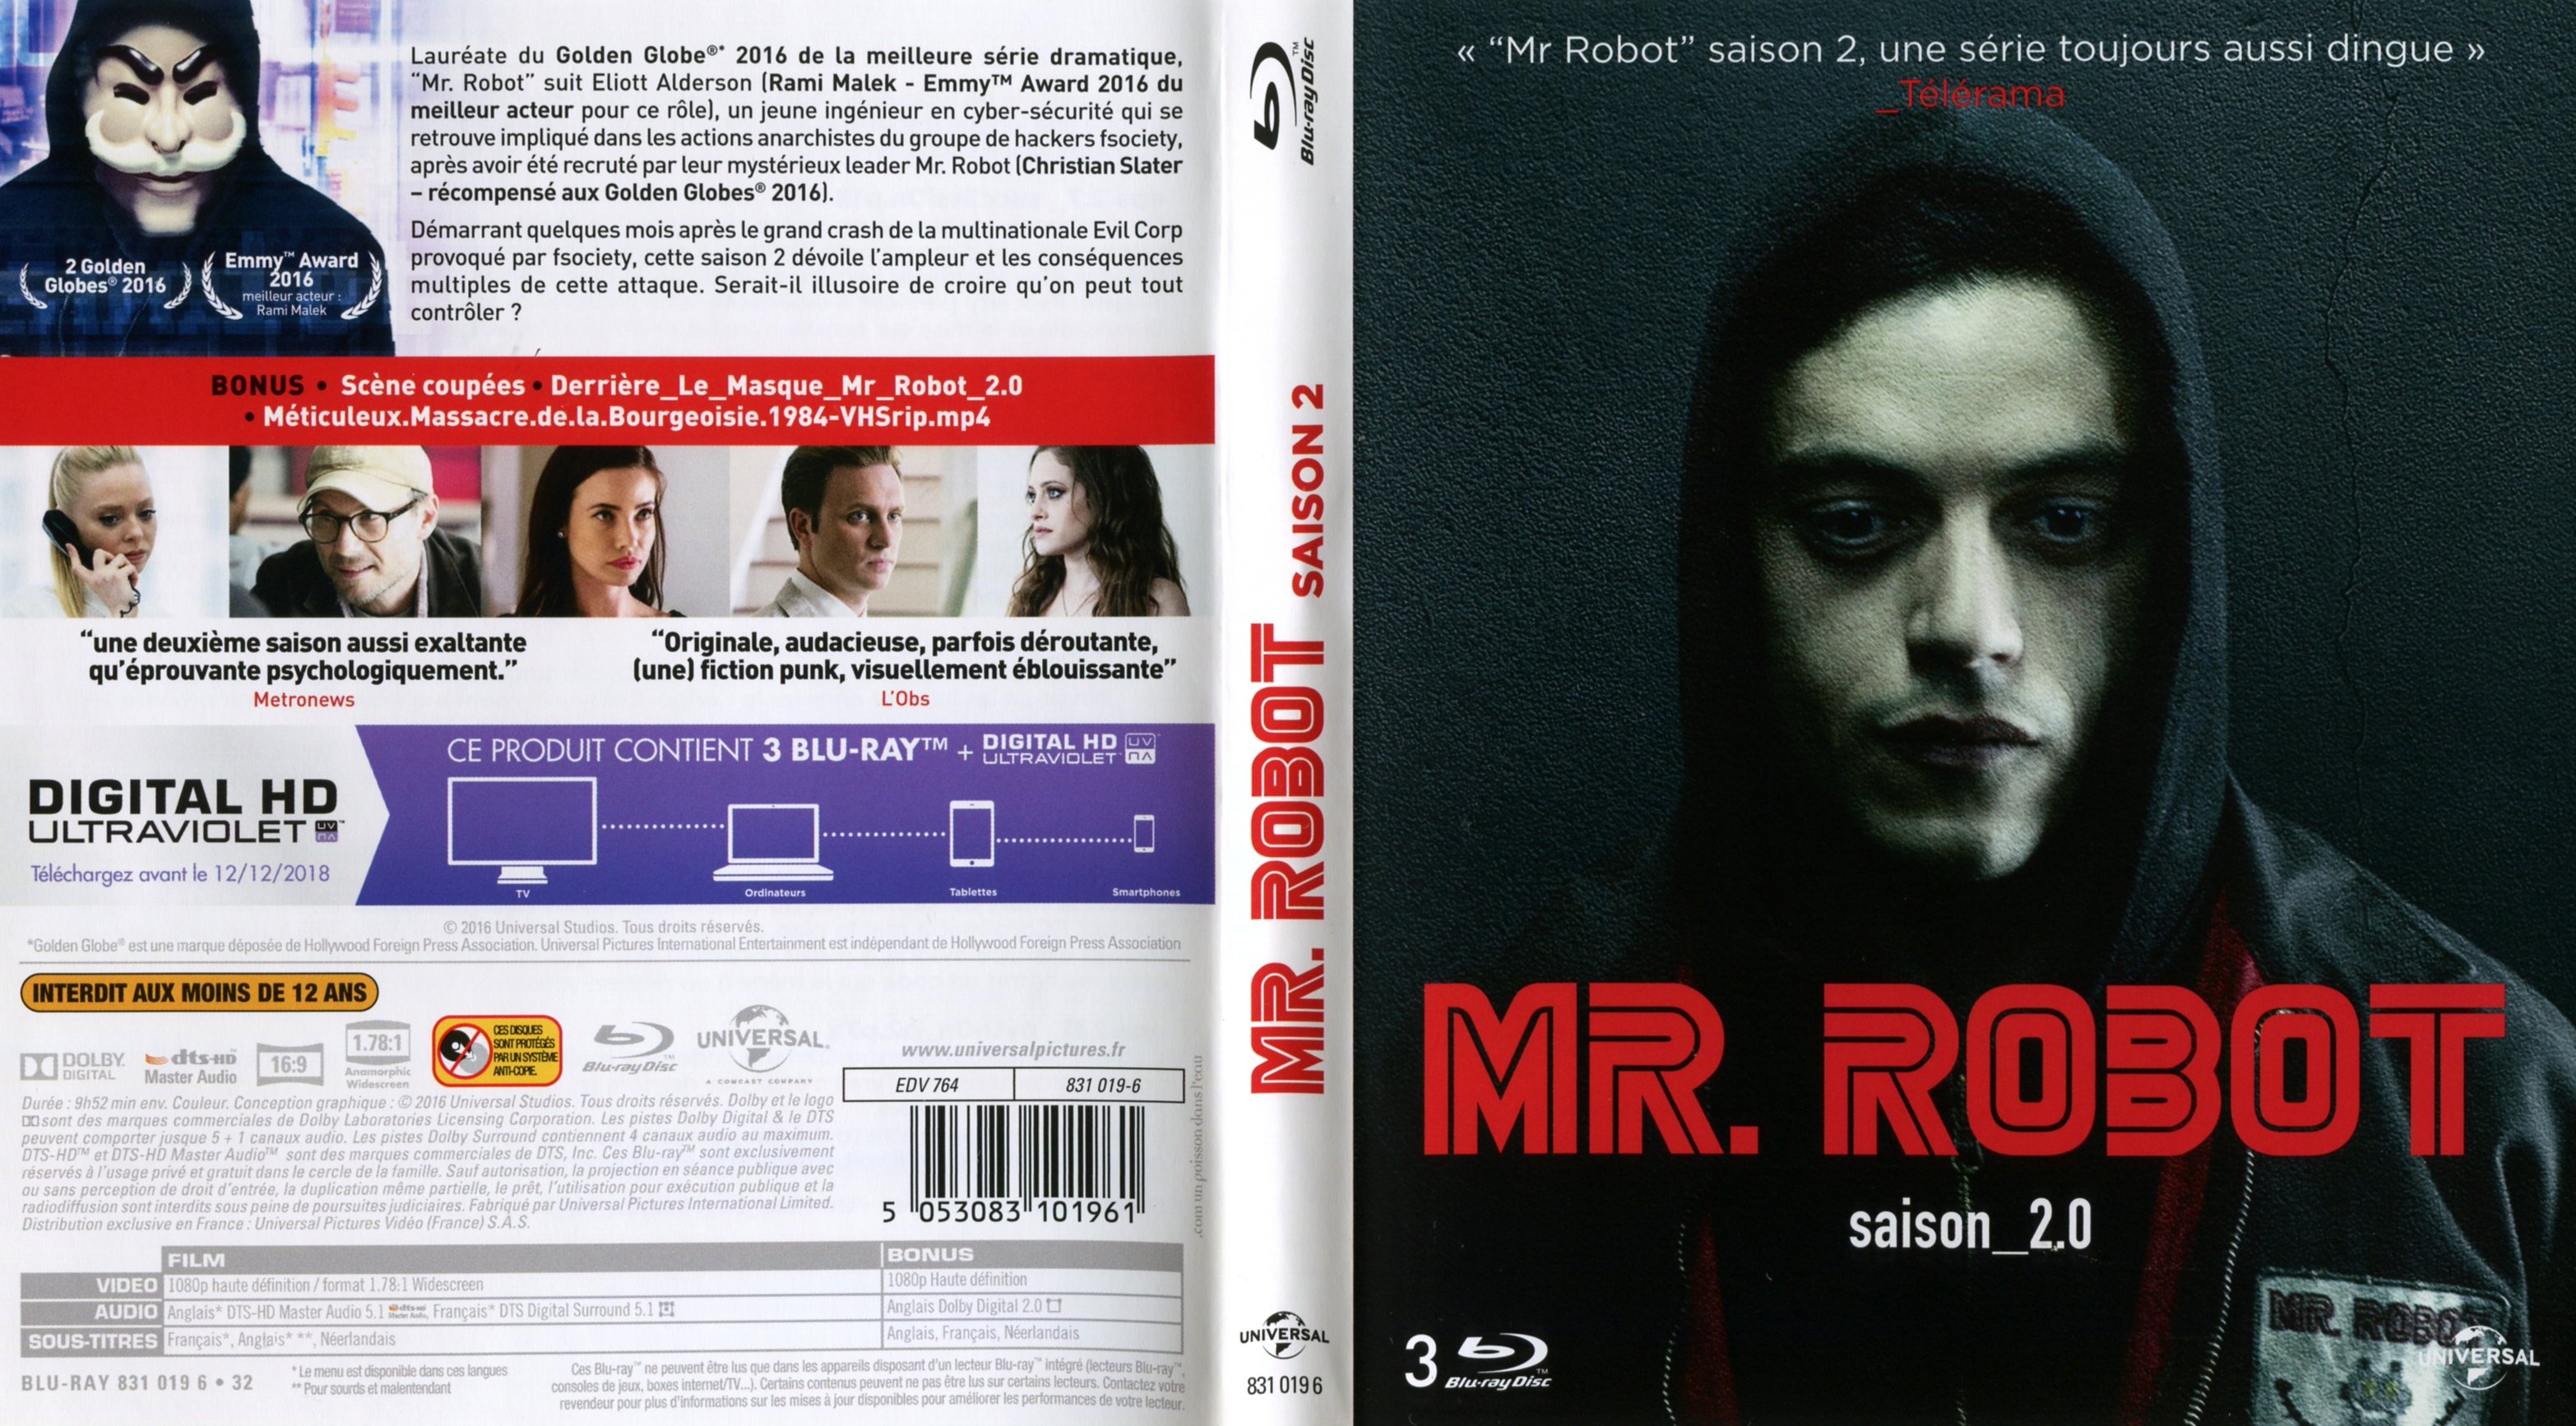 Jaquette DVD Mr Robot Saison 2 (BLU-RAY)